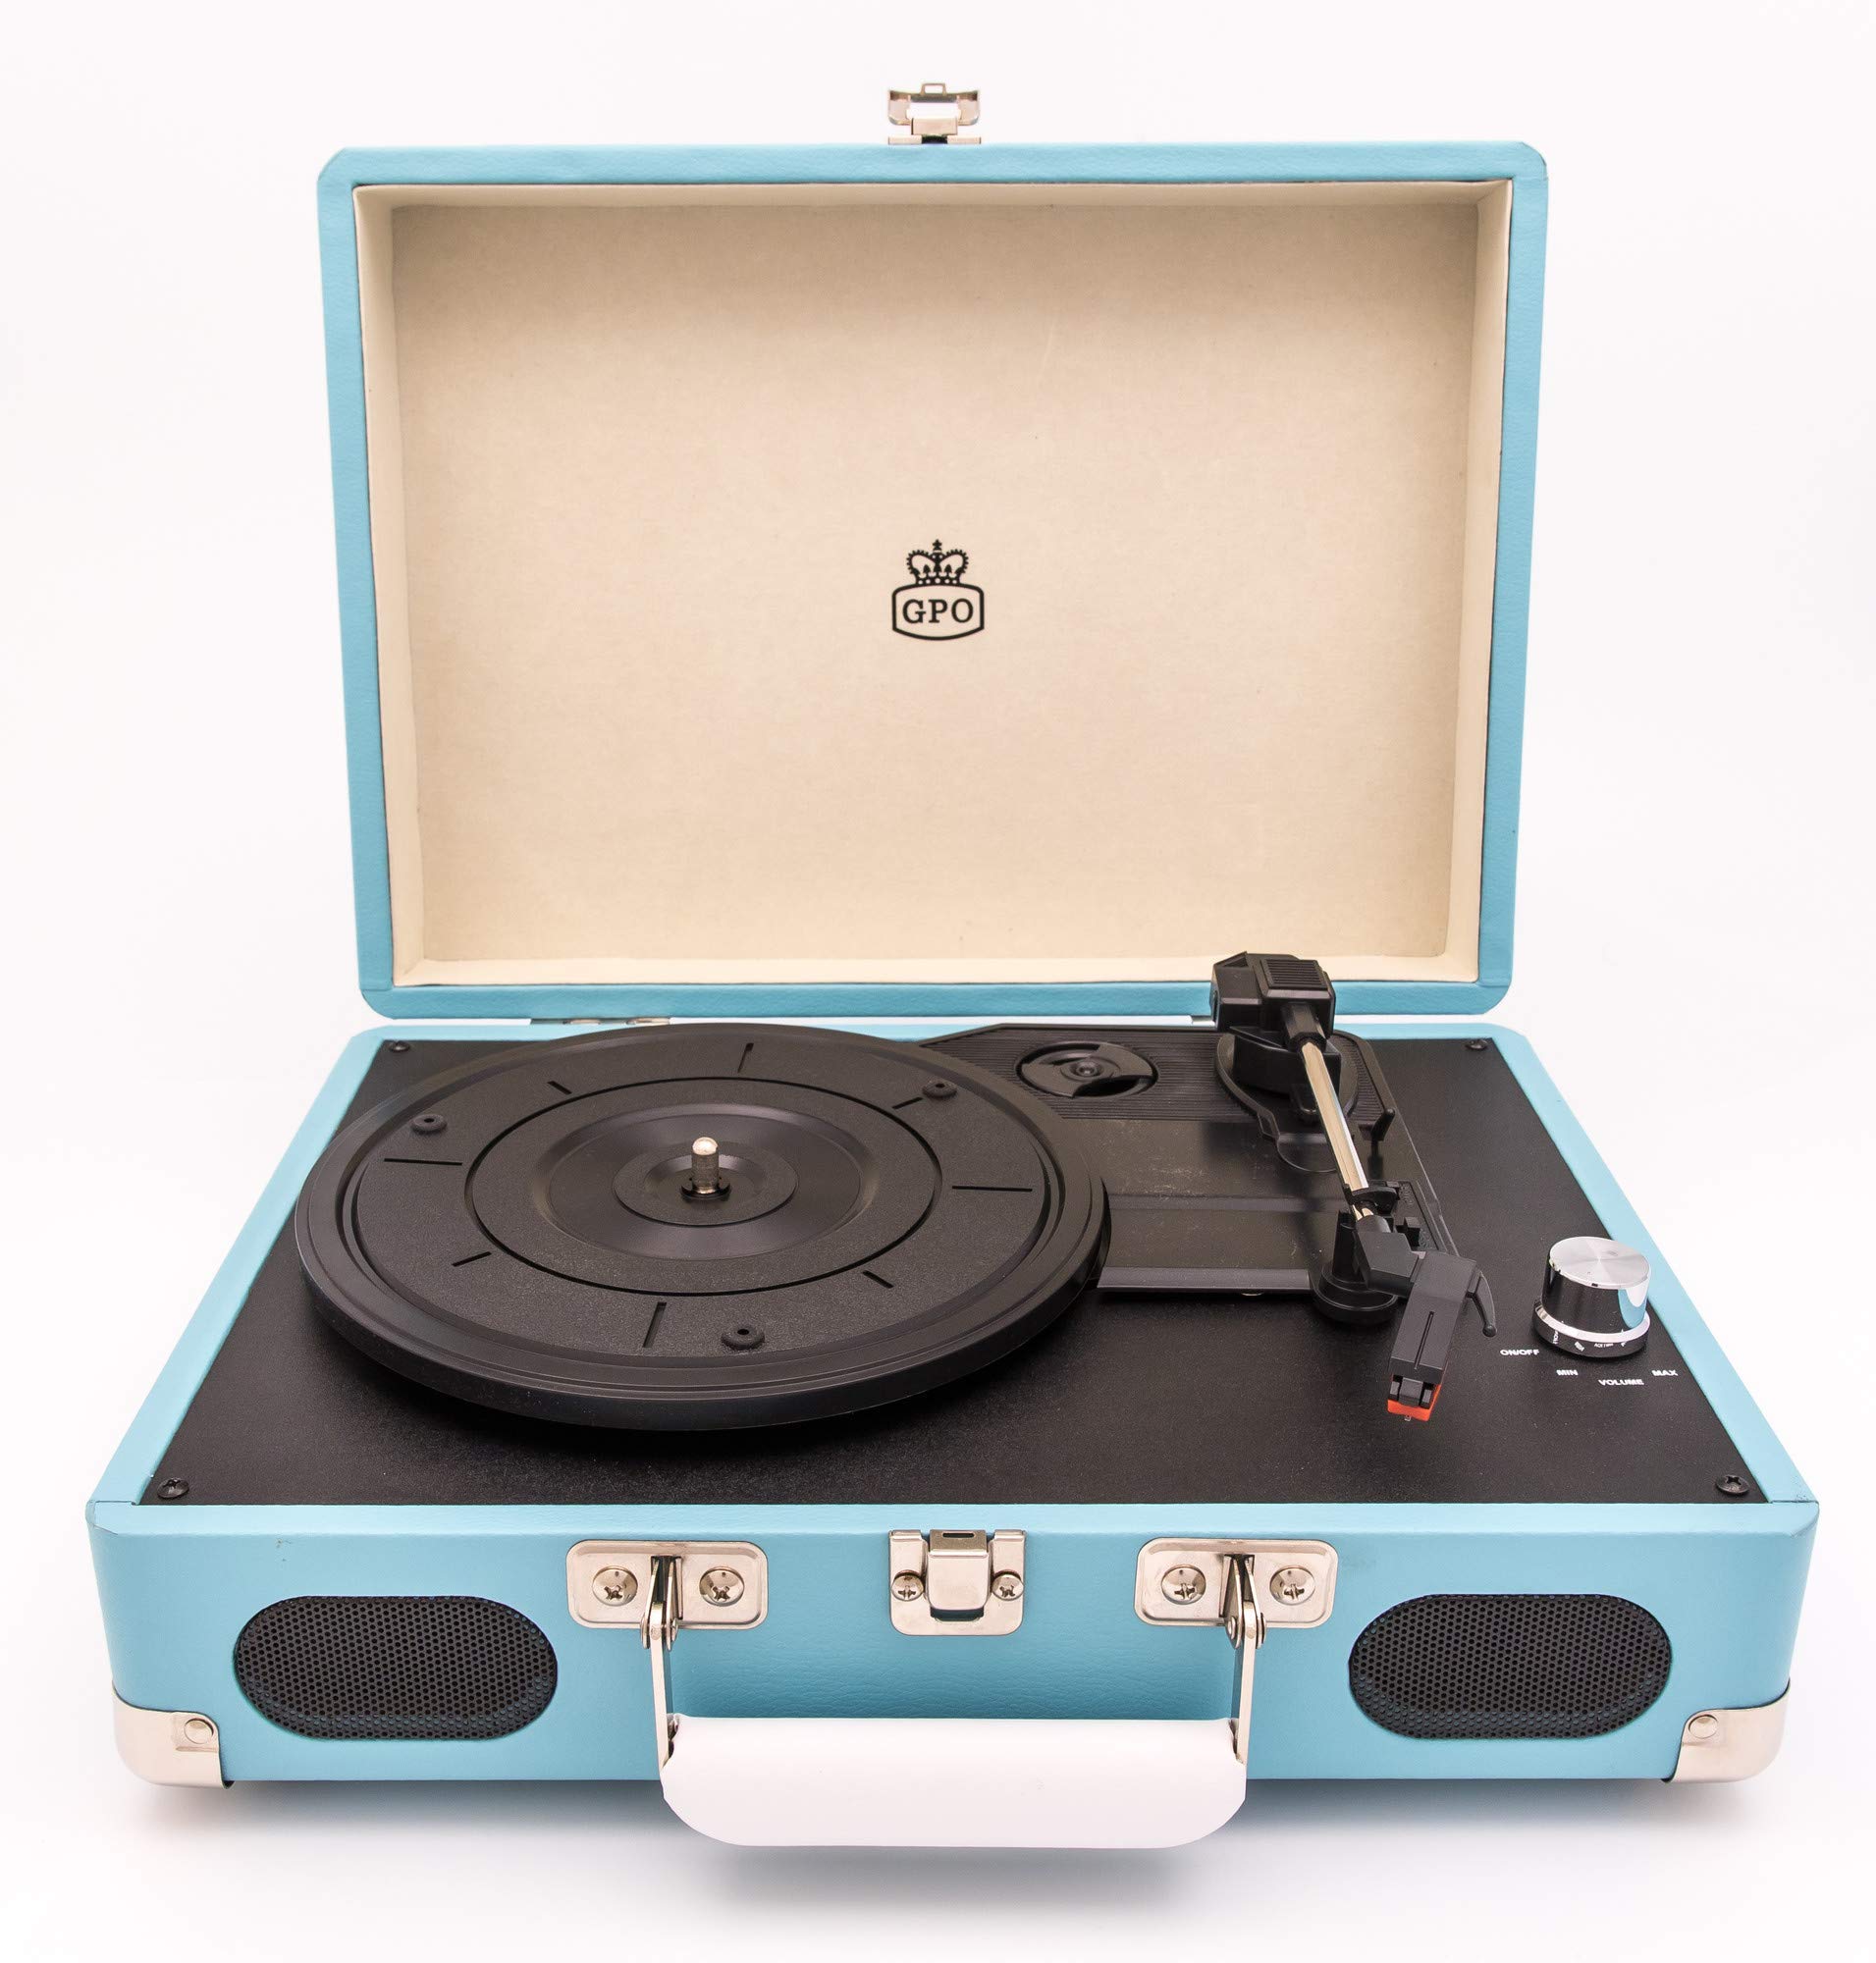 GPO SOHO Retro Kofferplattenspieler mit eingebautem Stereolautsprecher, Türkisblau